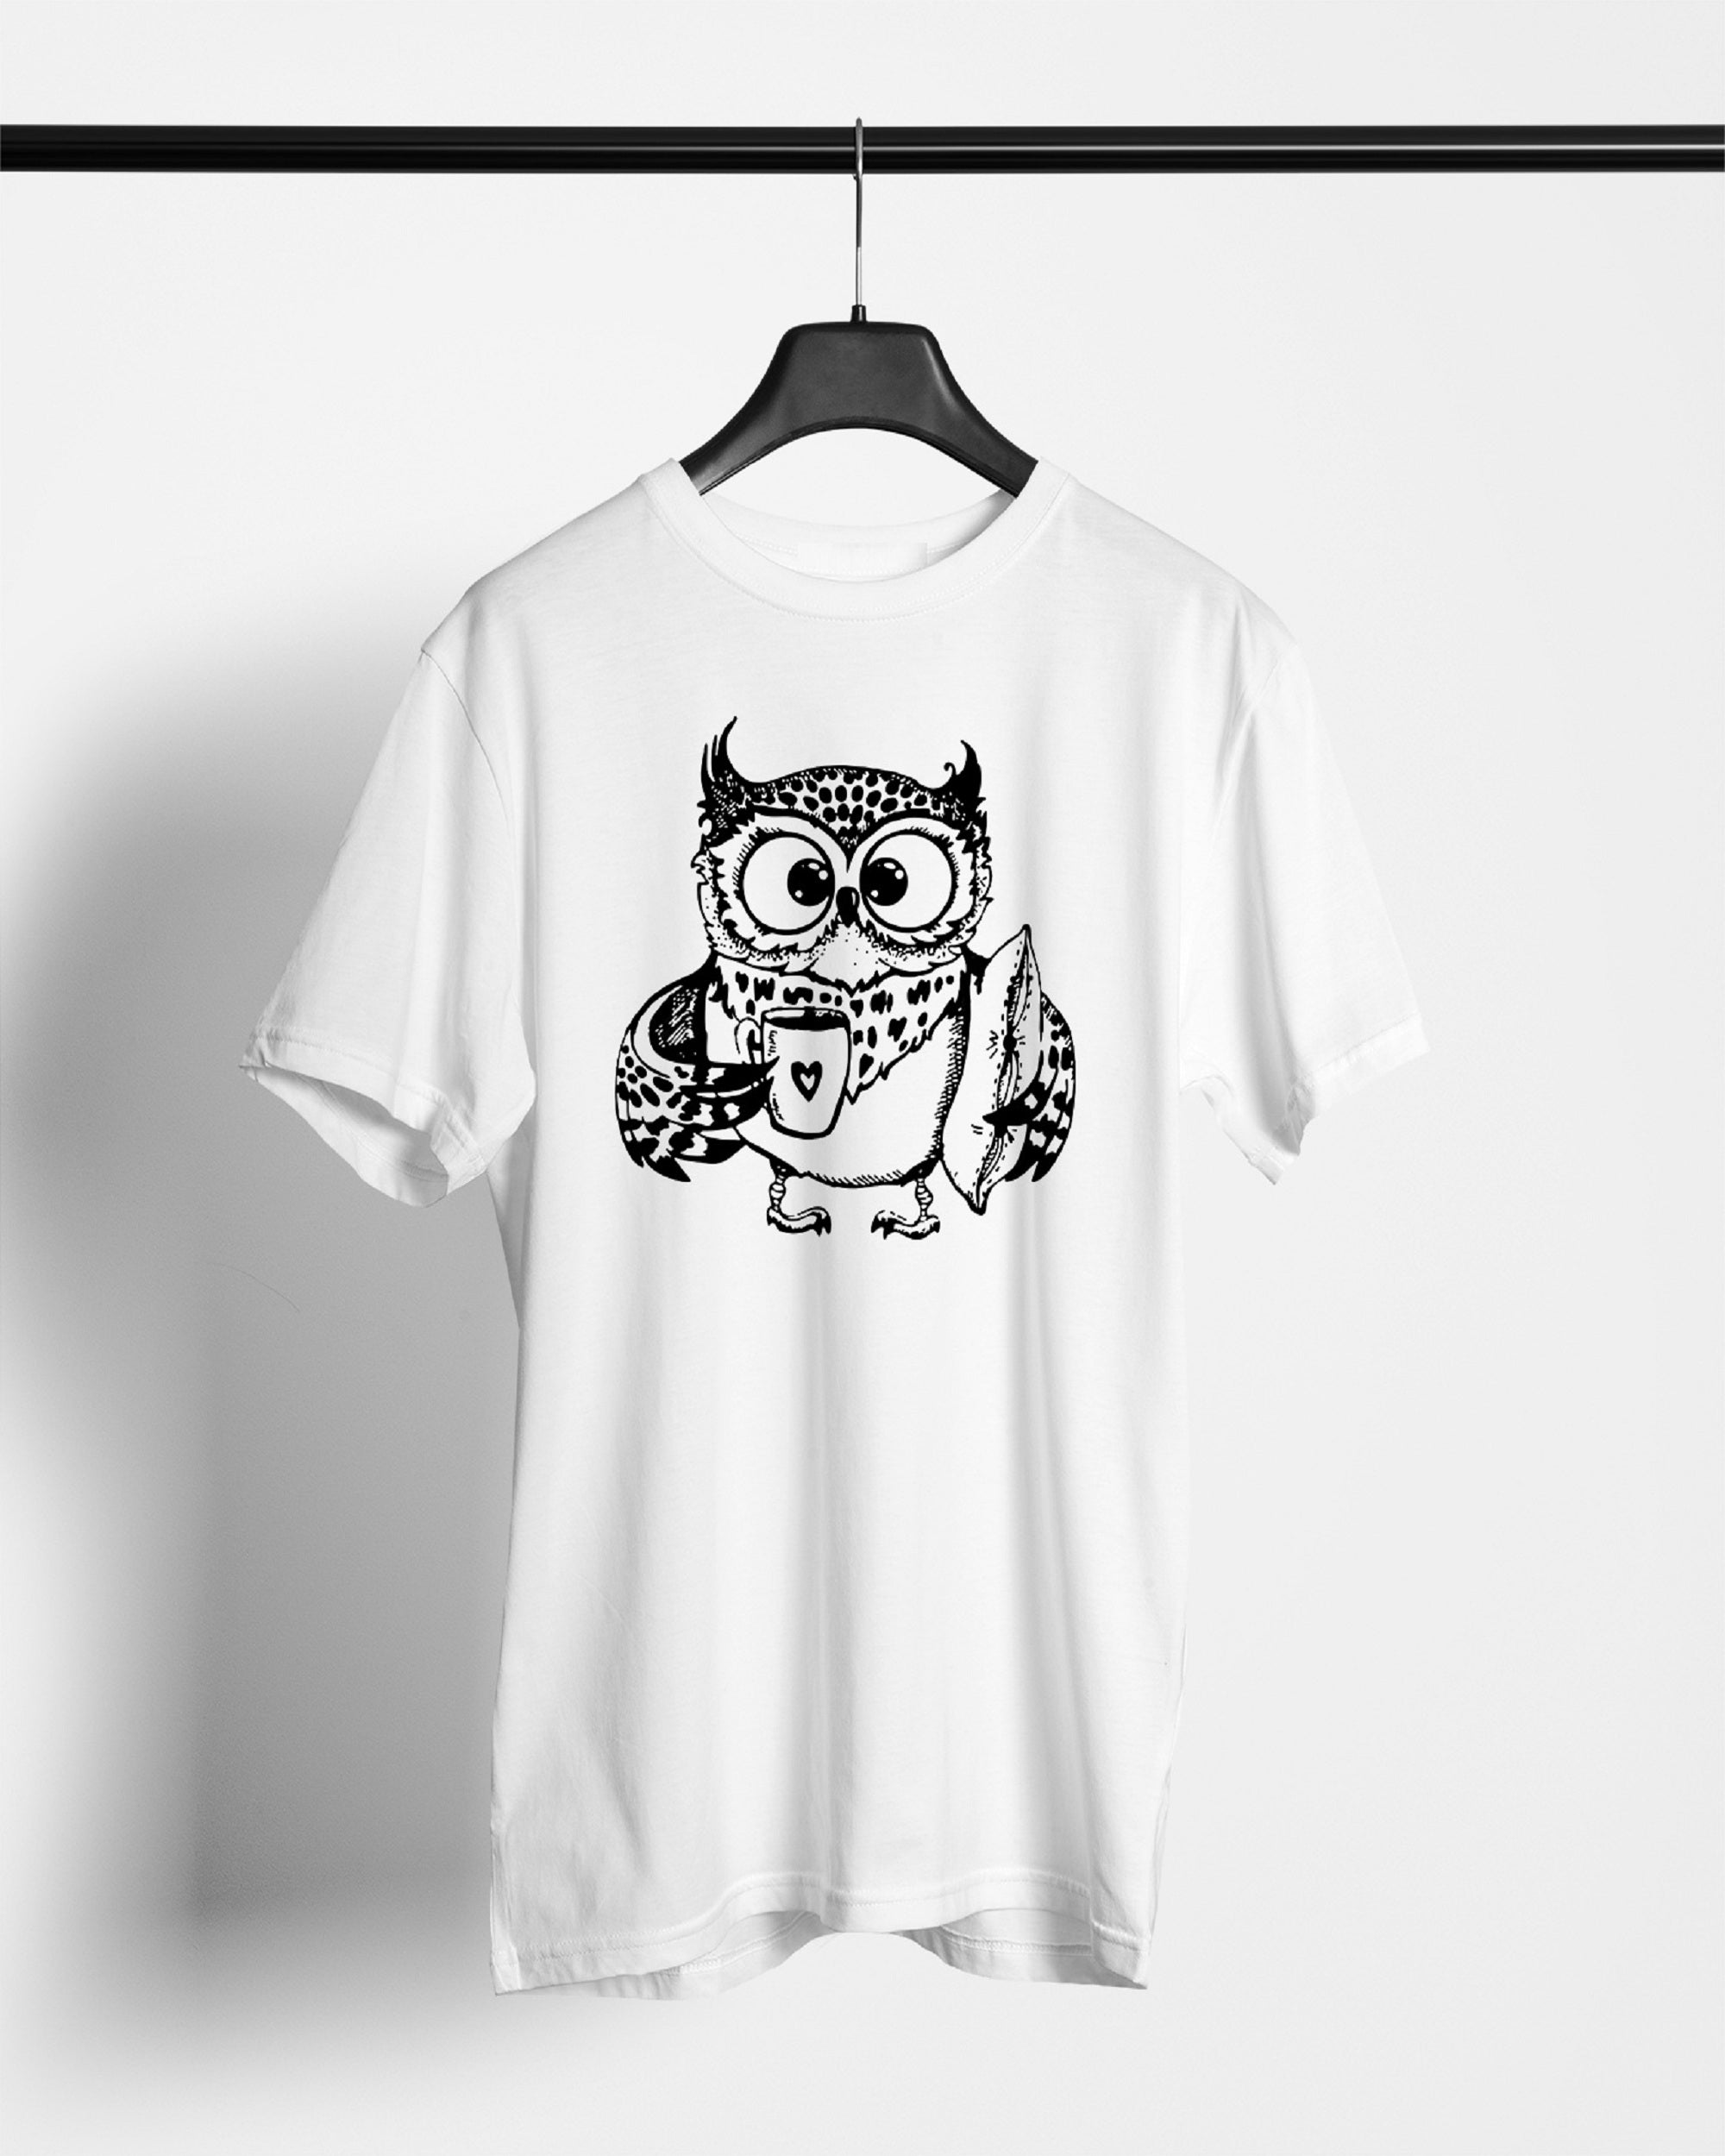 Sleeping Owl T-Shirts For Men || White || Stylish Tshirts || 100% Cotton || Best T-Shirt For Men's